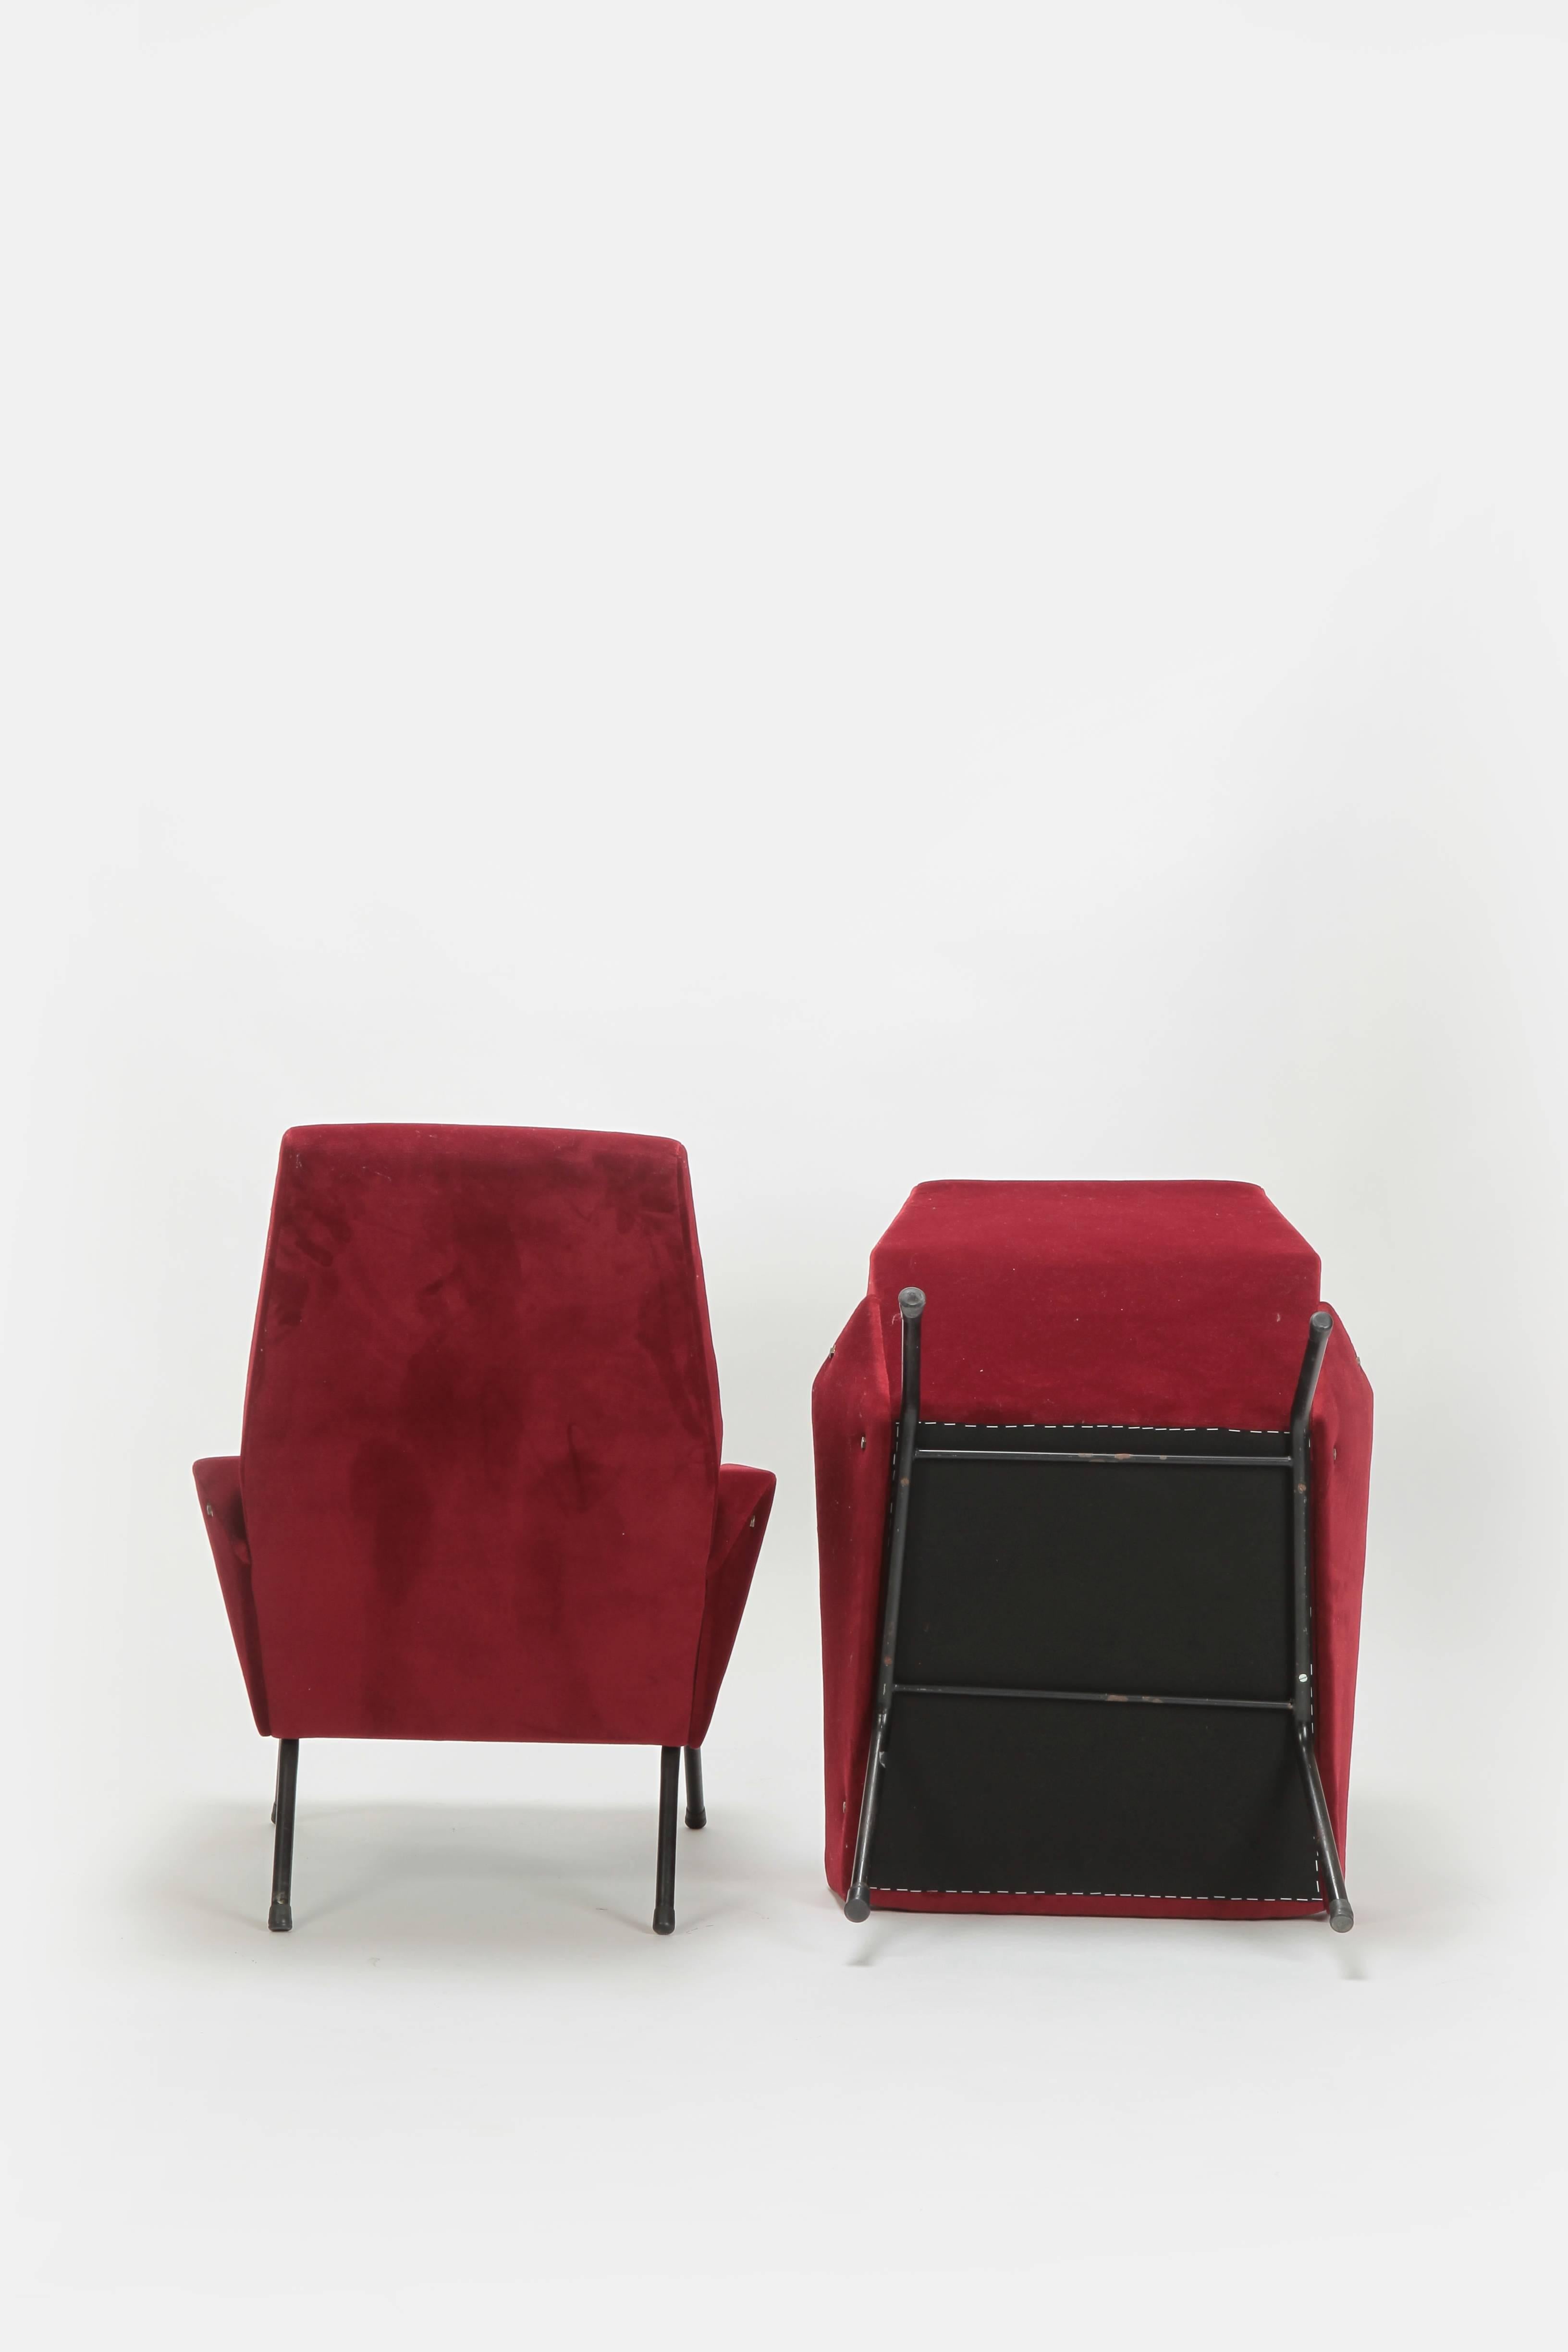 European Pair of Gianfranco Frattini Velor Chairs, 1950s